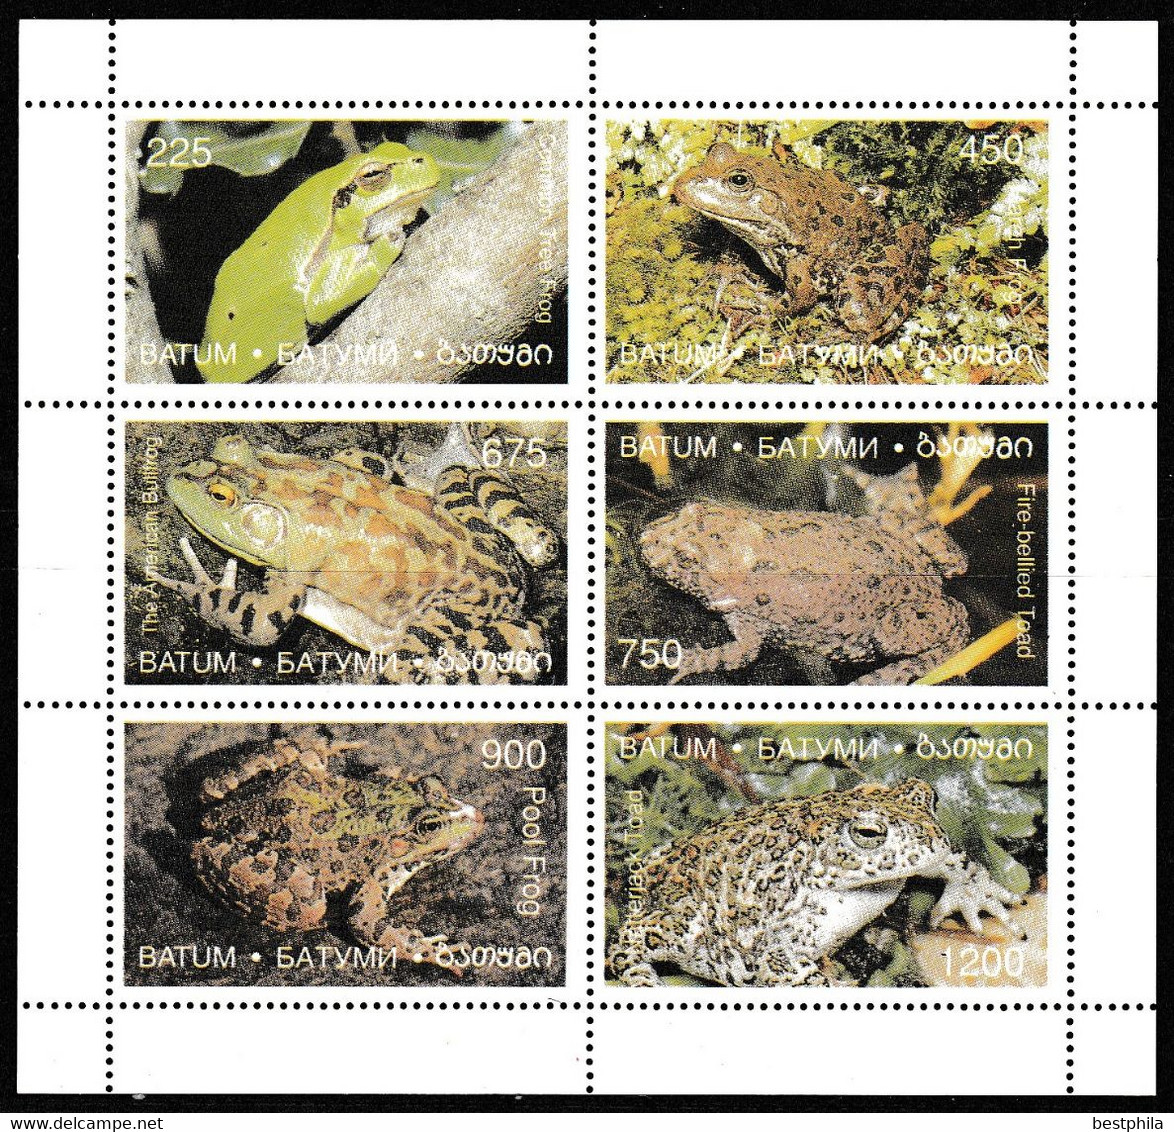 Batum - Land Creatures, Frogs - 1.Mini S/Sheet ** MNH - Georgien